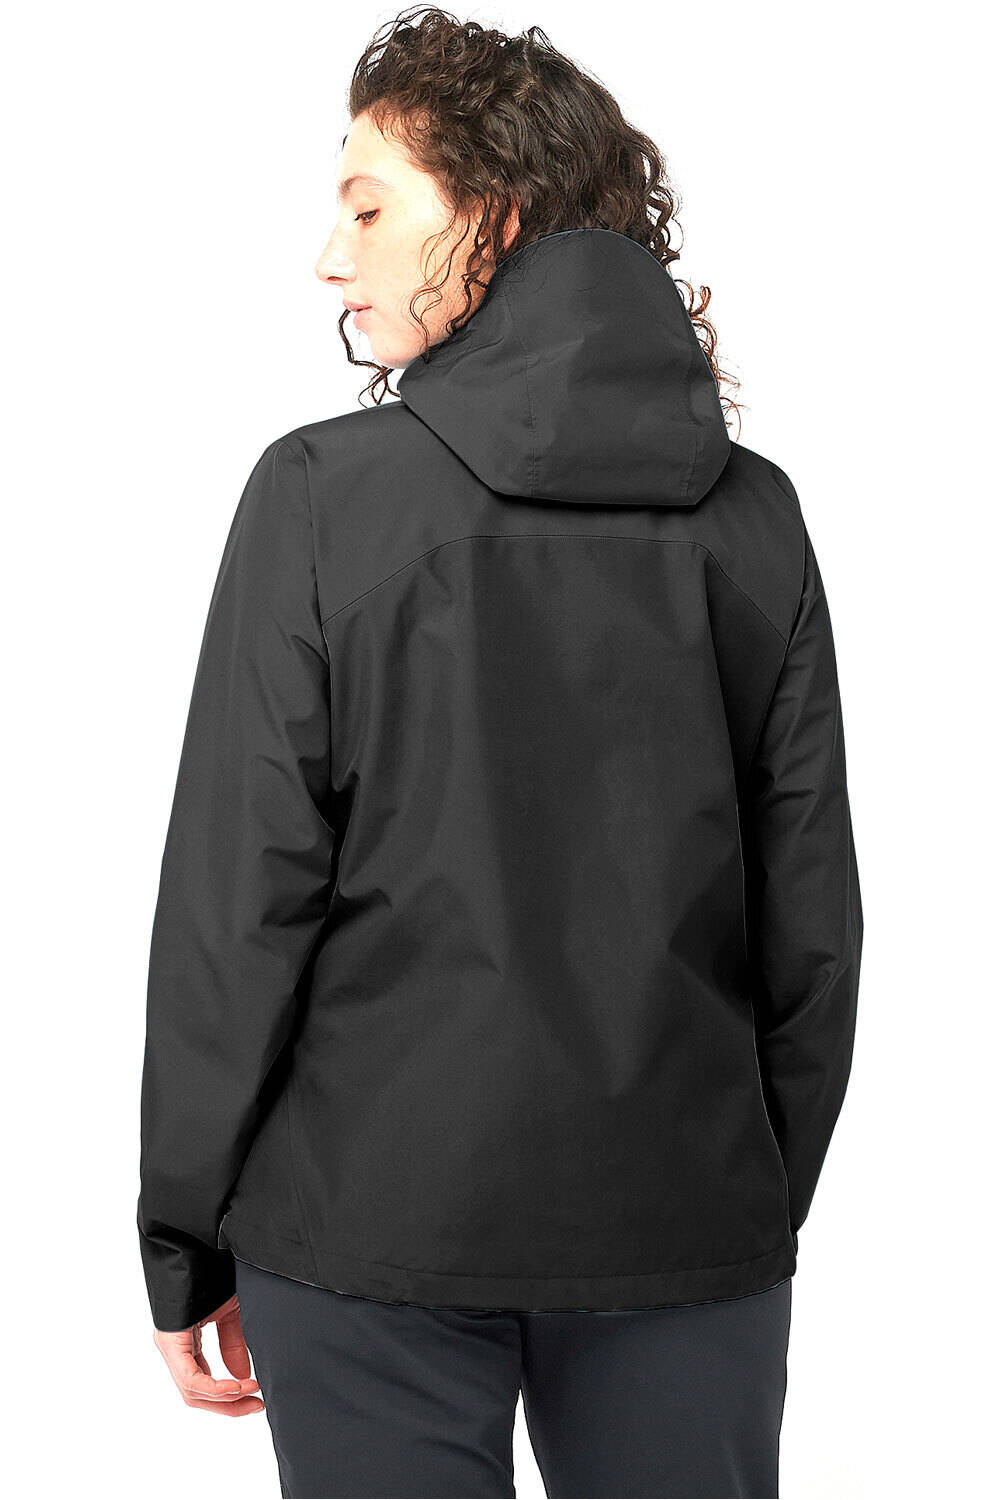 Salomon chaqueta impermeable mujer OUTLINE GTX 2.5L JKT W DEEP BLACK vista trasera